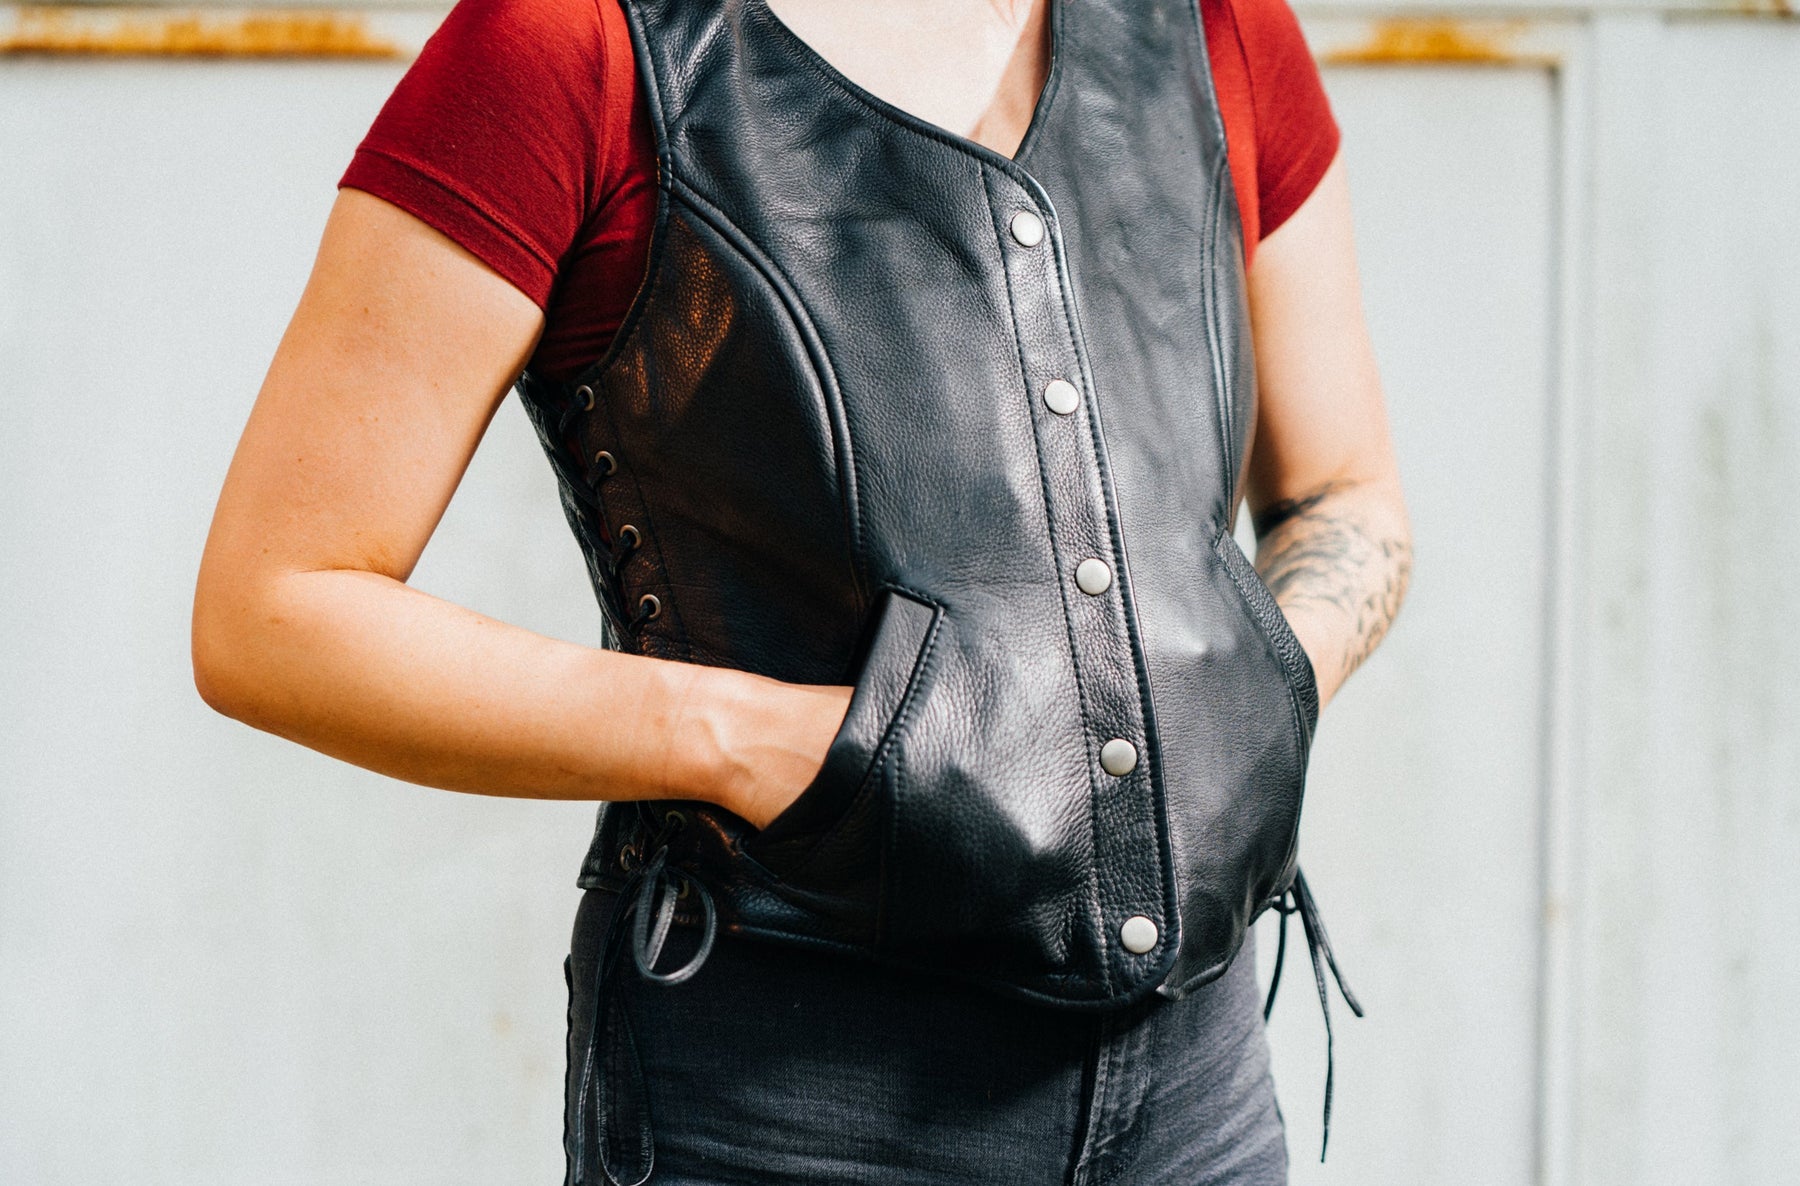 SPEEDY WOMEN Motorcycle Leather Vest Women's Vest Best Leather Ny   